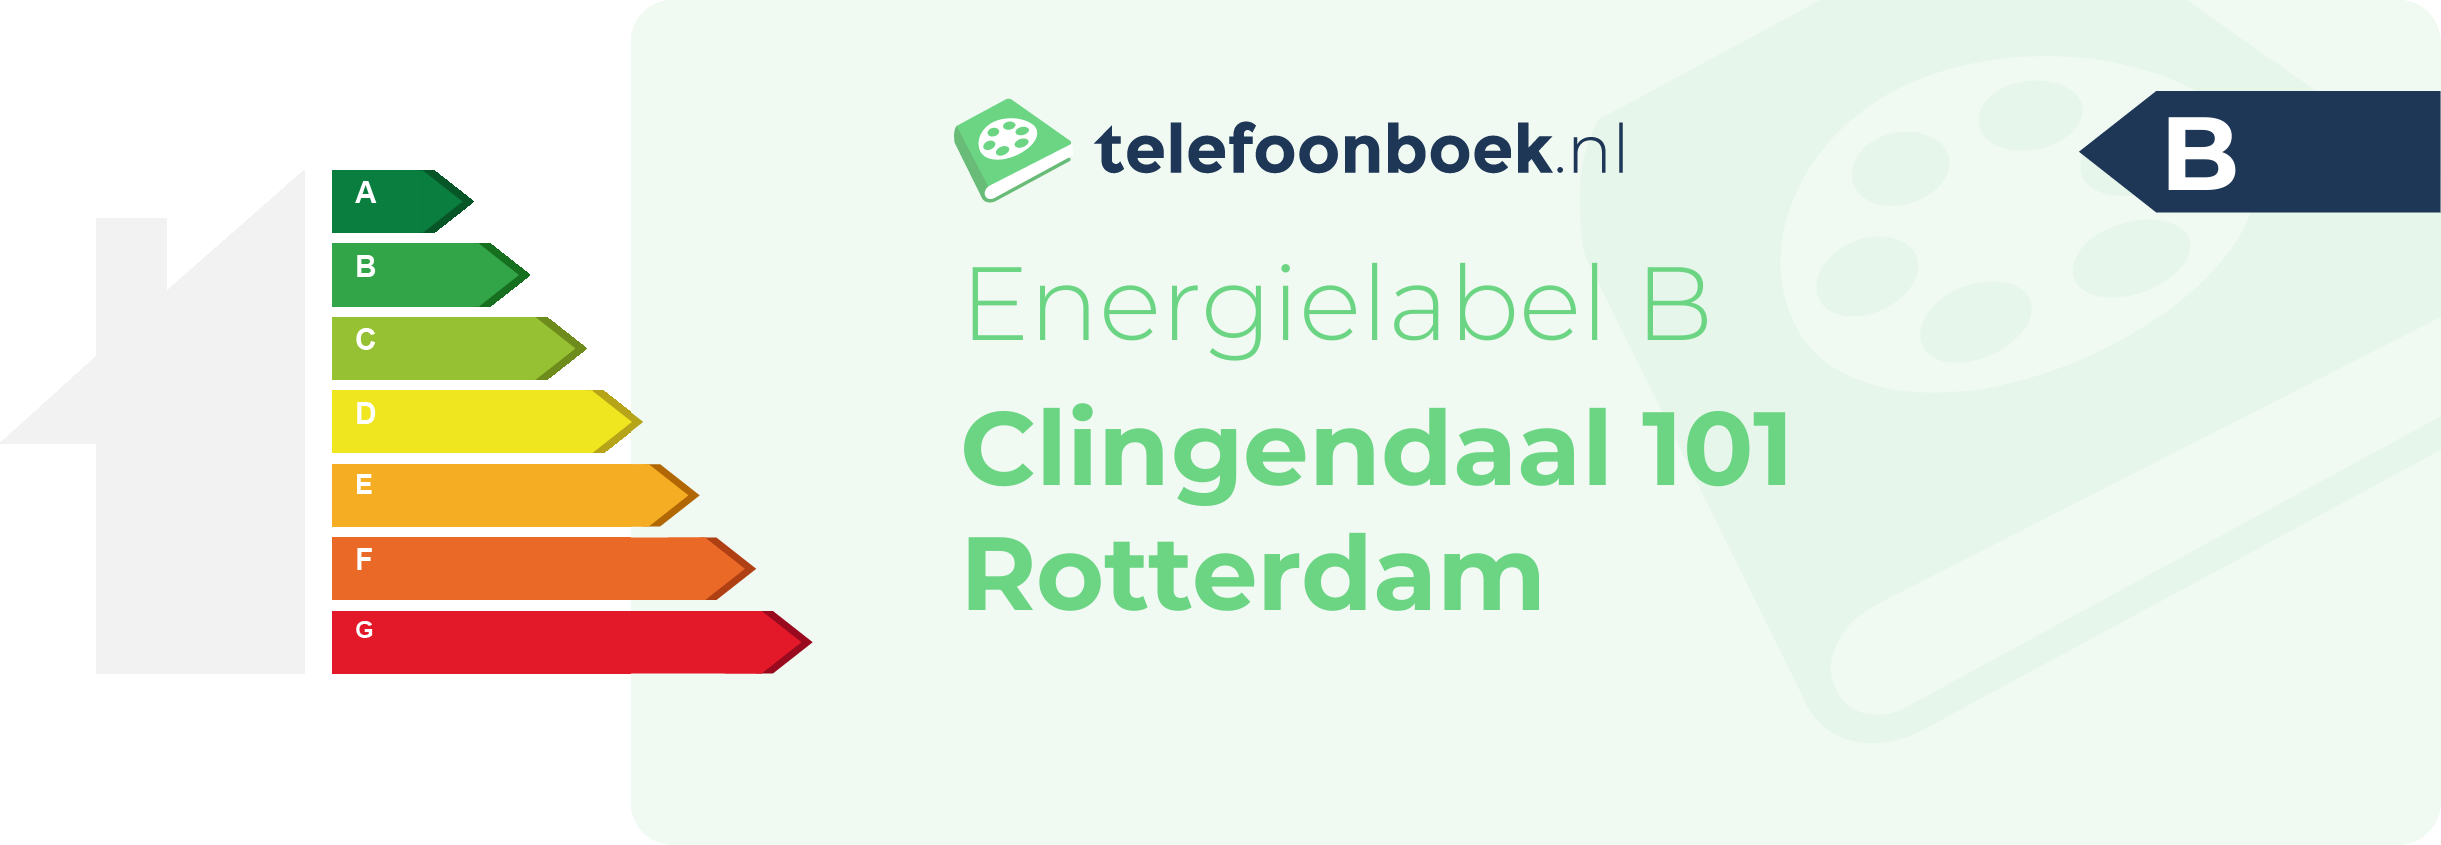 Energielabel Clingendaal 101 Rotterdam